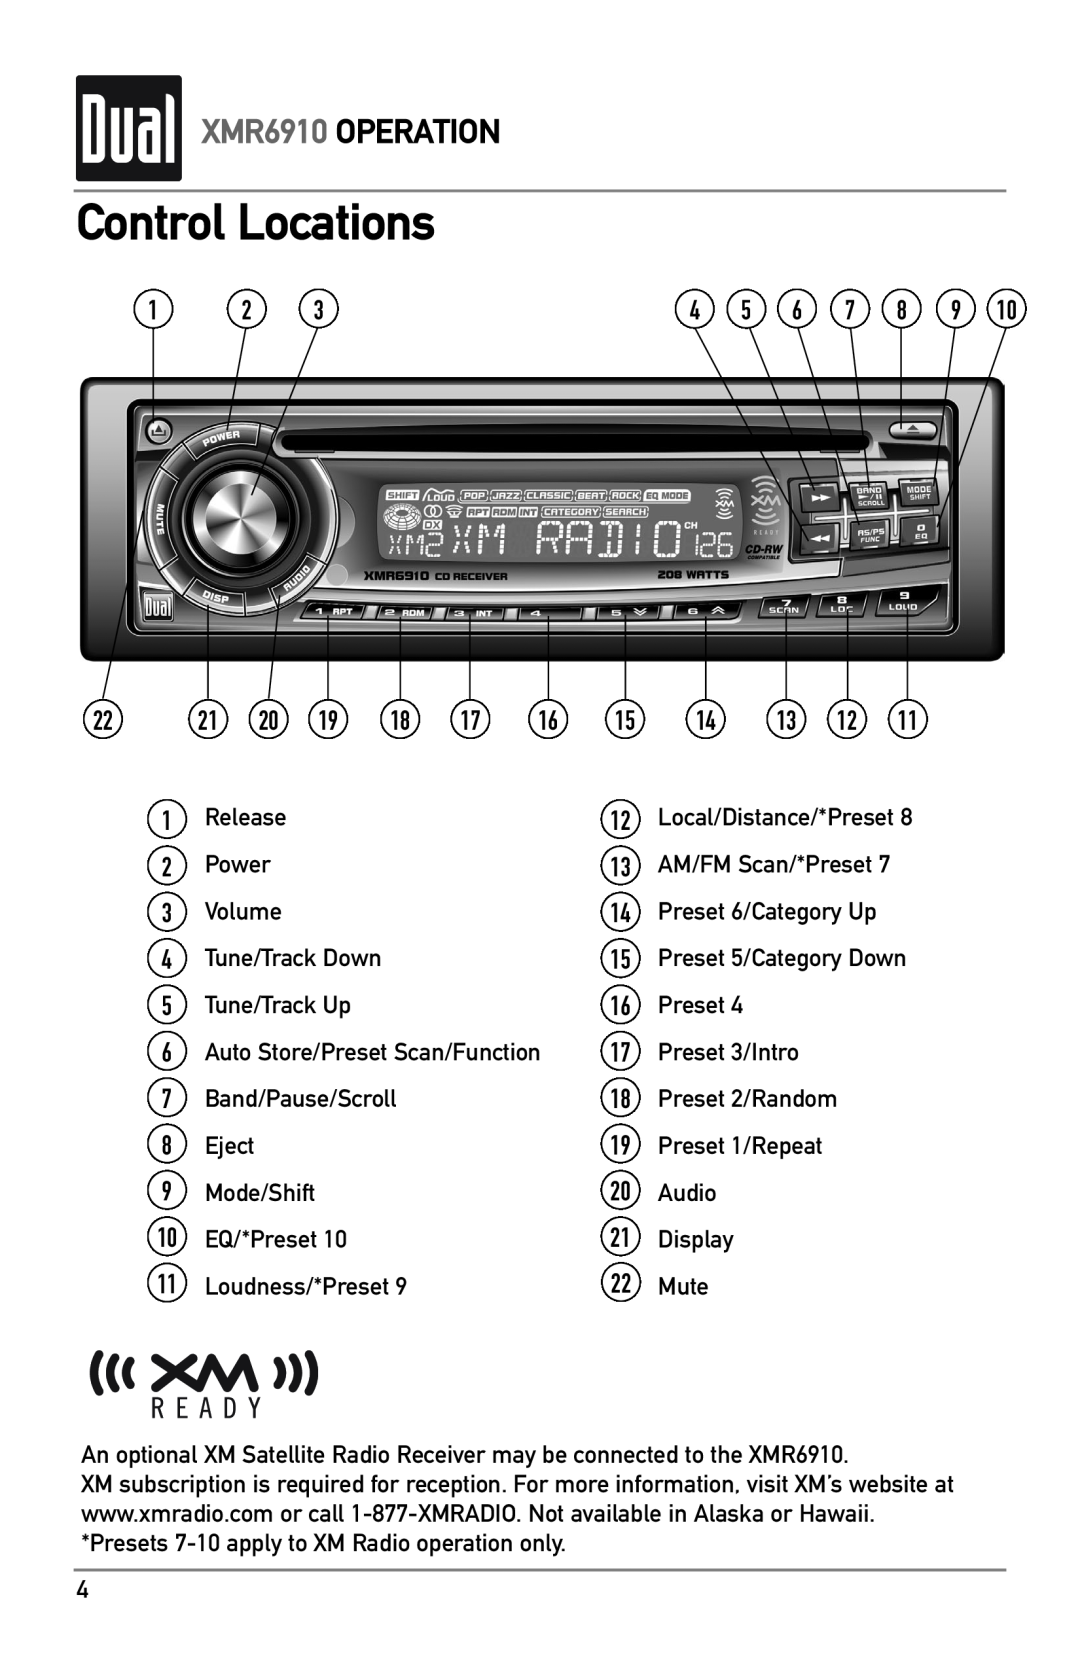 XM Satellite Radio owner manual Control Locations, XMR6910 OPERATION 